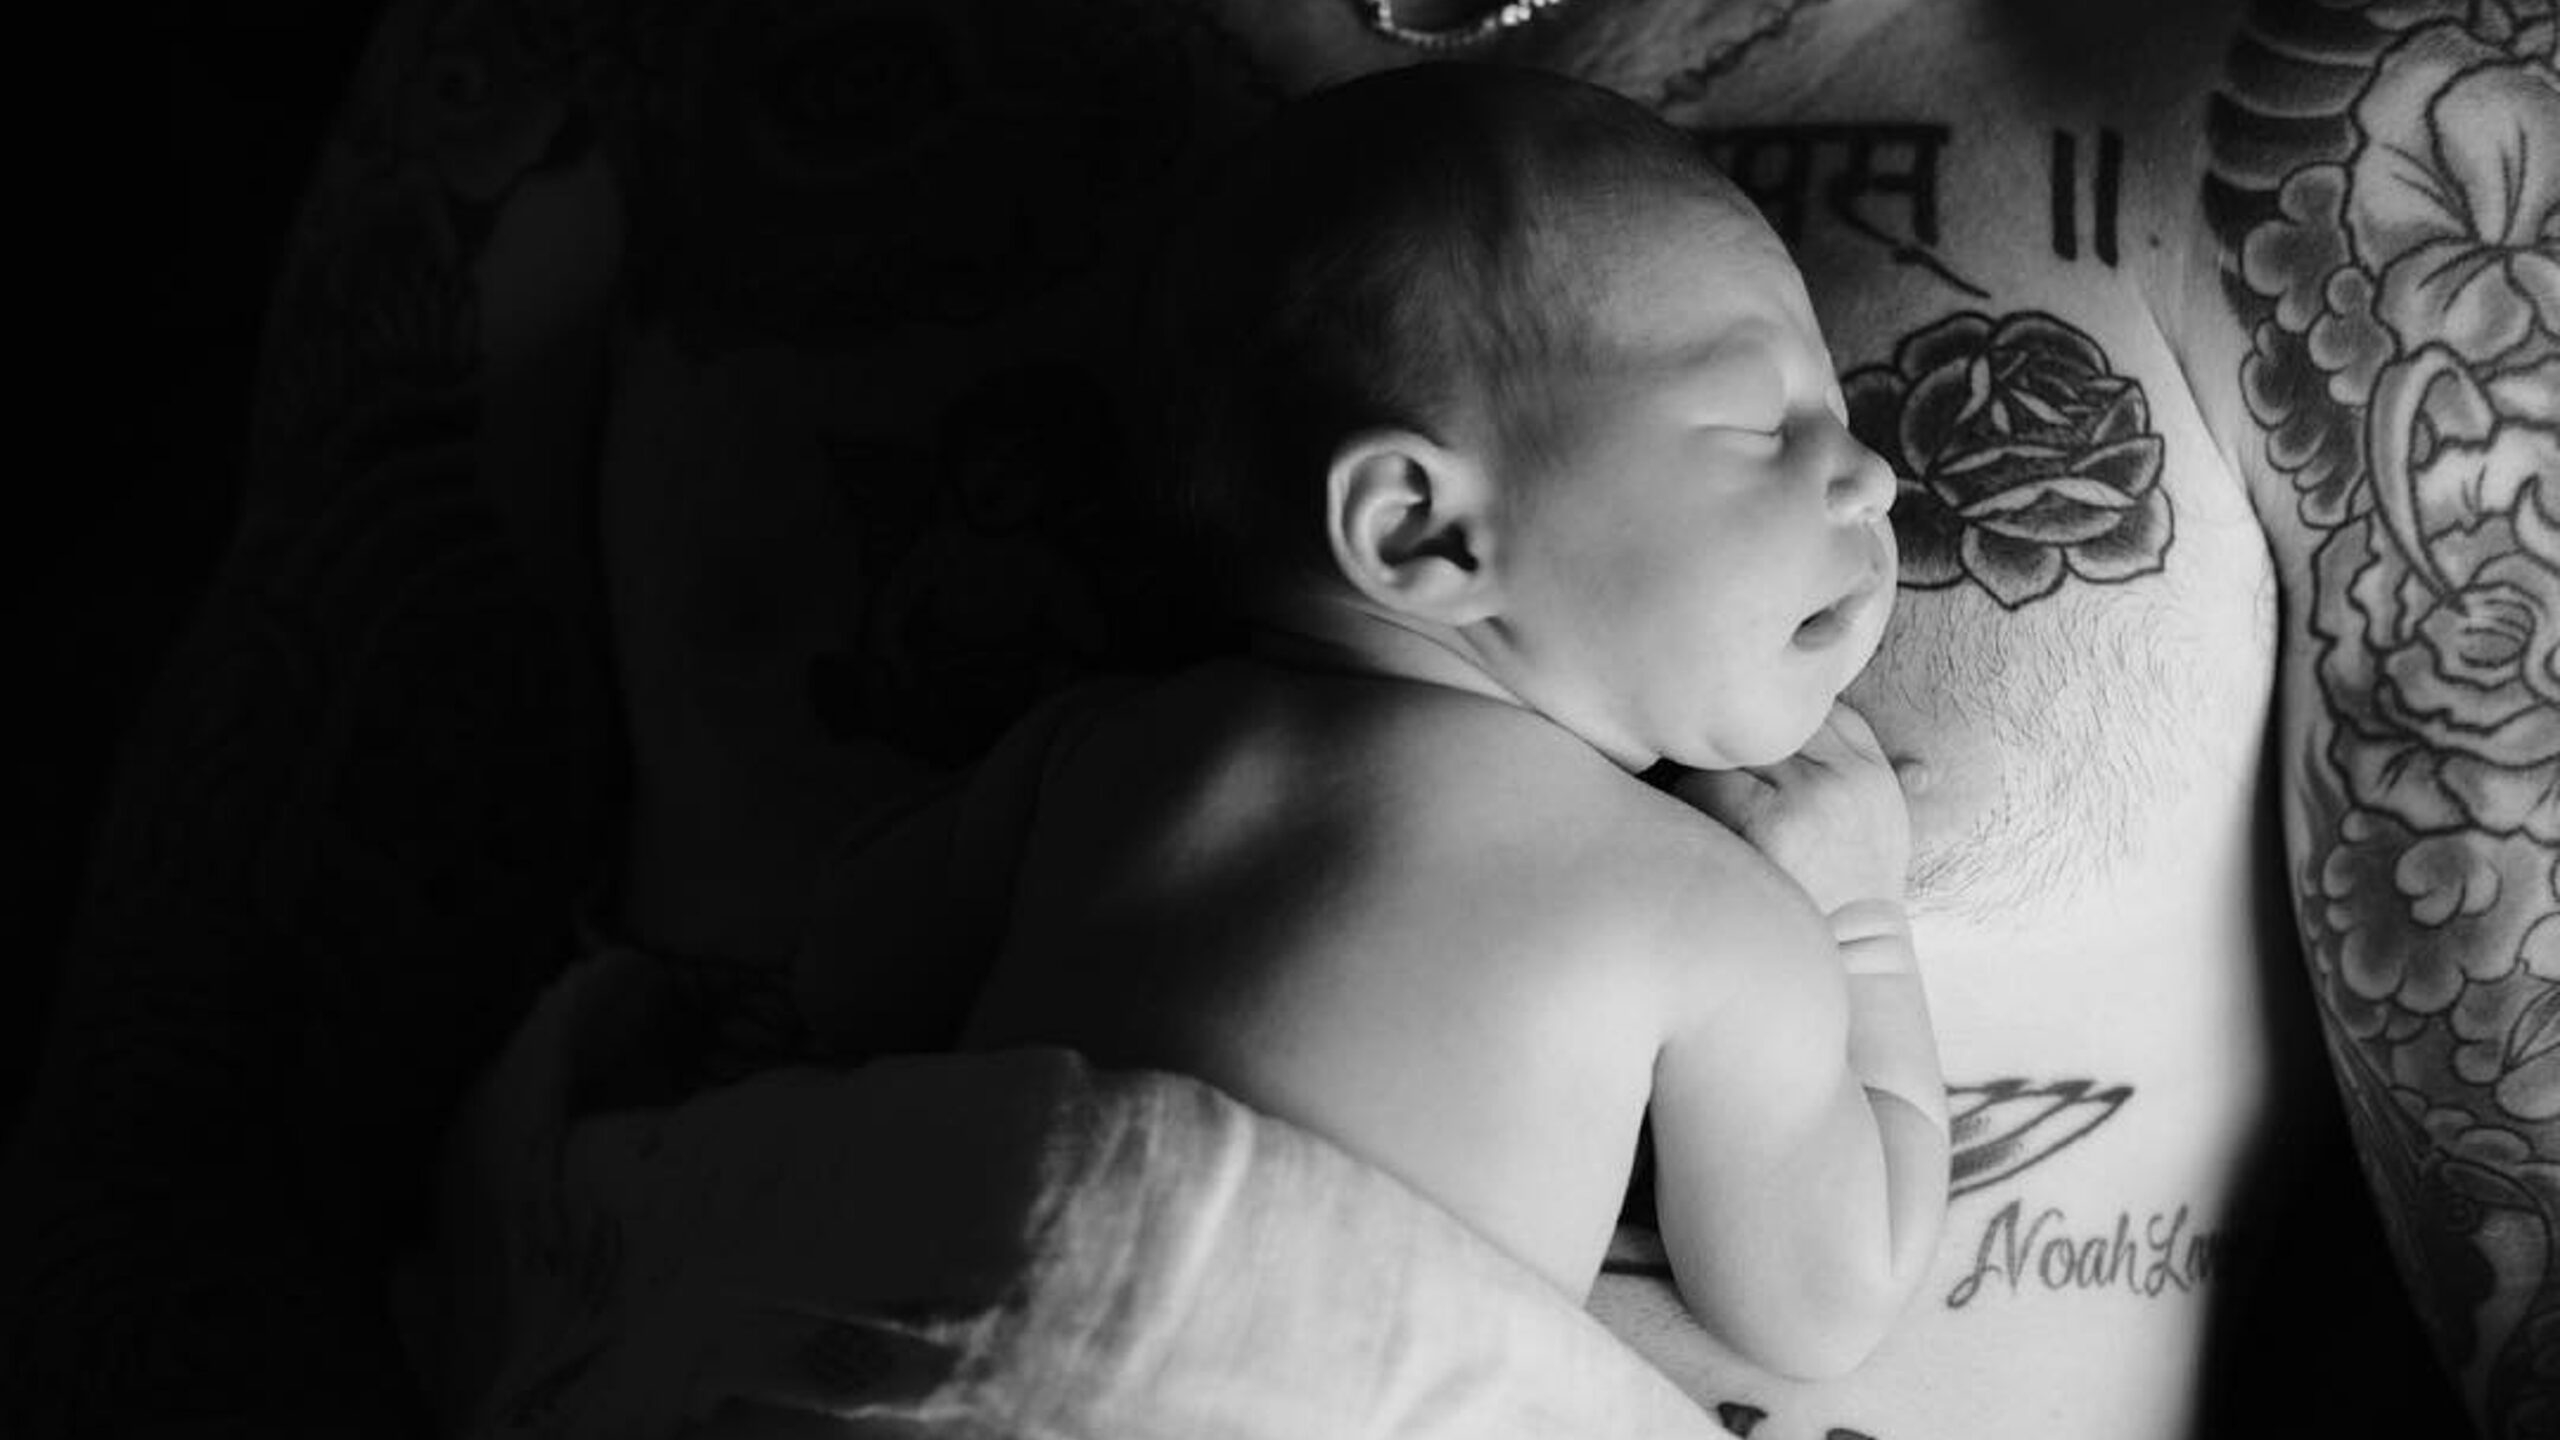 LOOK: Adam Levine, Behati Prinsloo share first photo of baby Dusty Rose